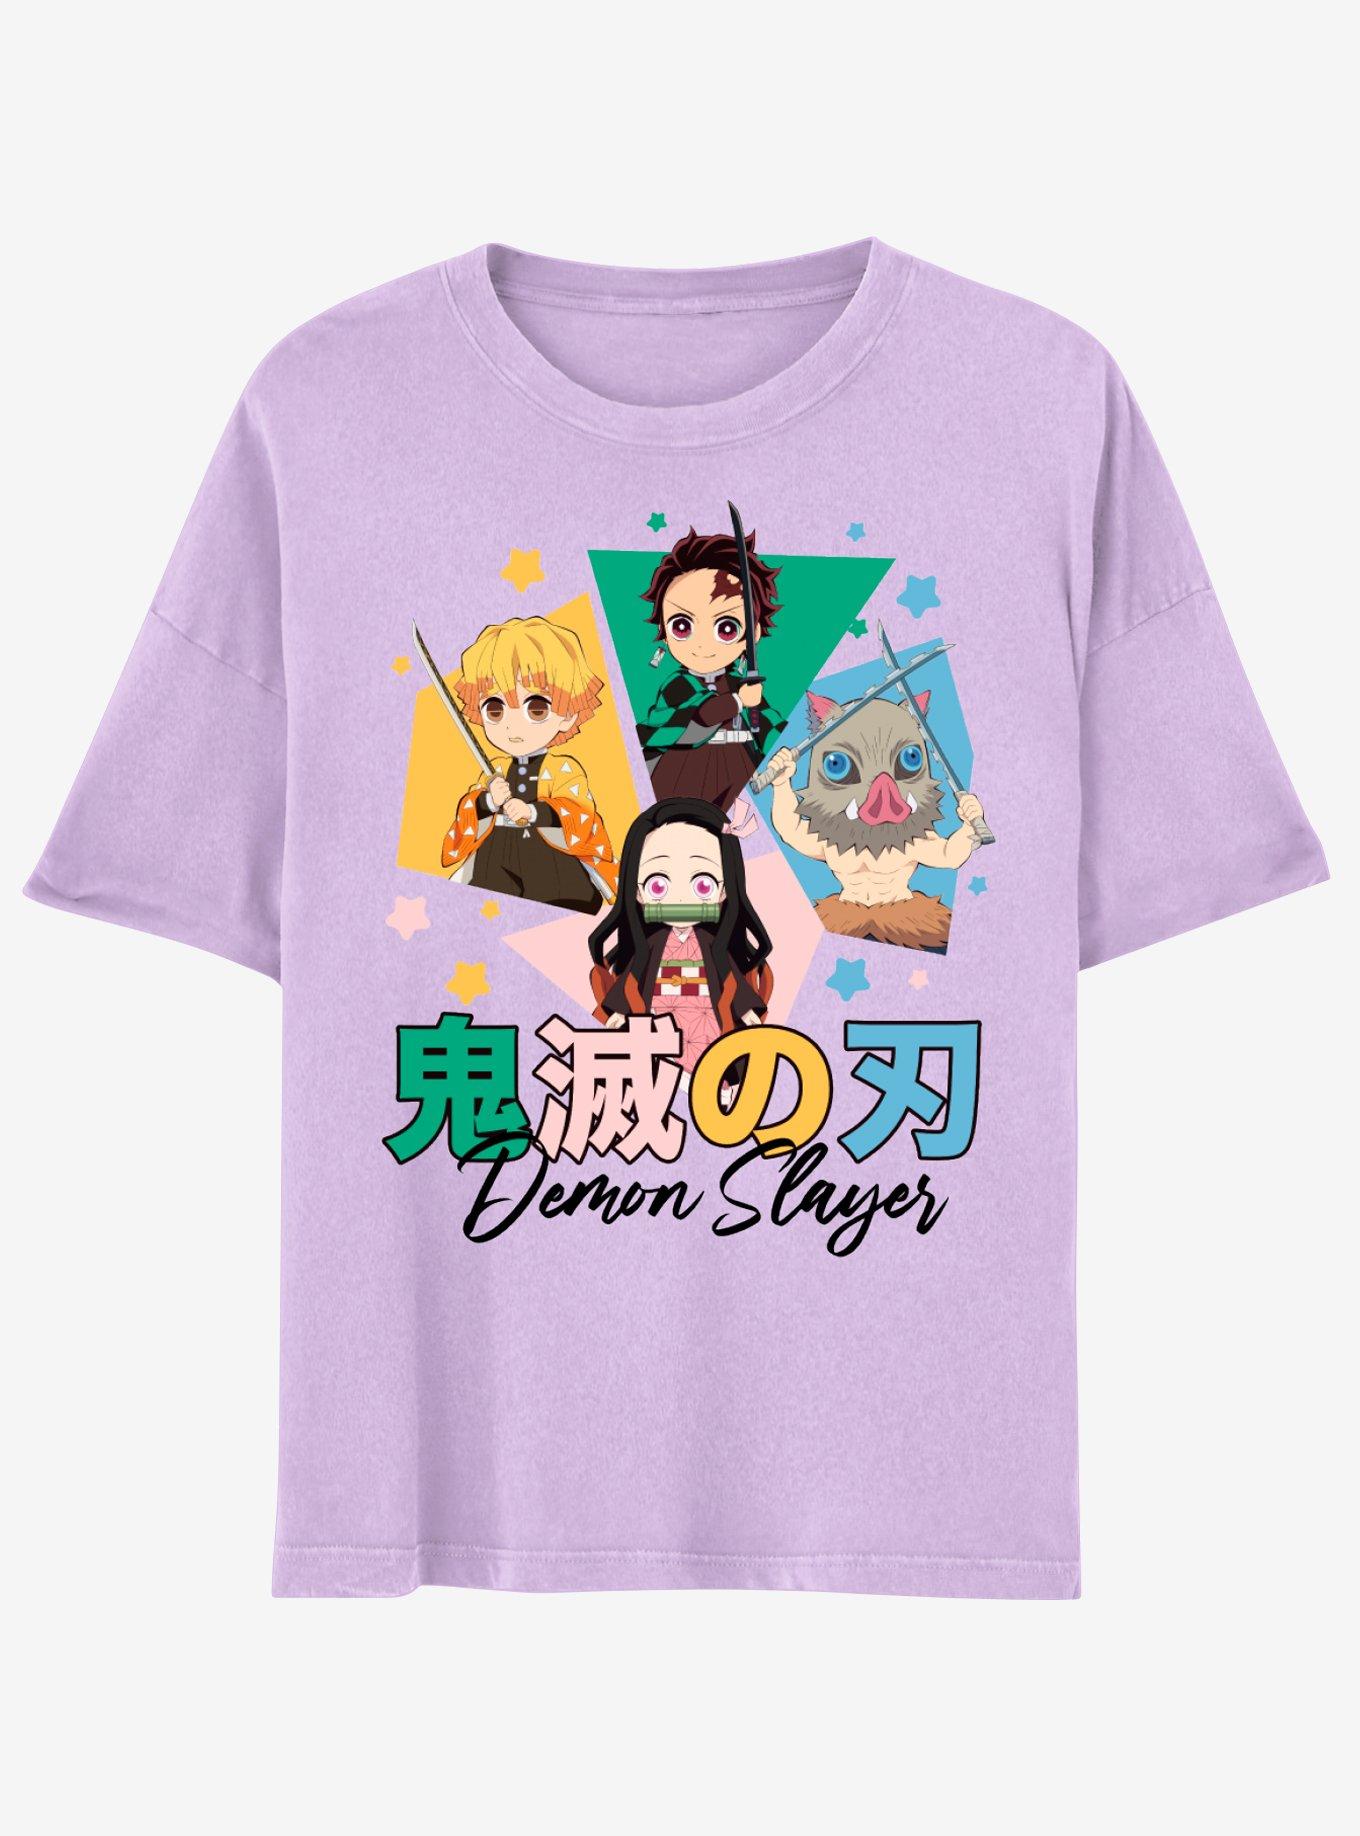 Team DS - Demon Slayer: Kimetsu no Yaiba T-Shirt - The Shirt List